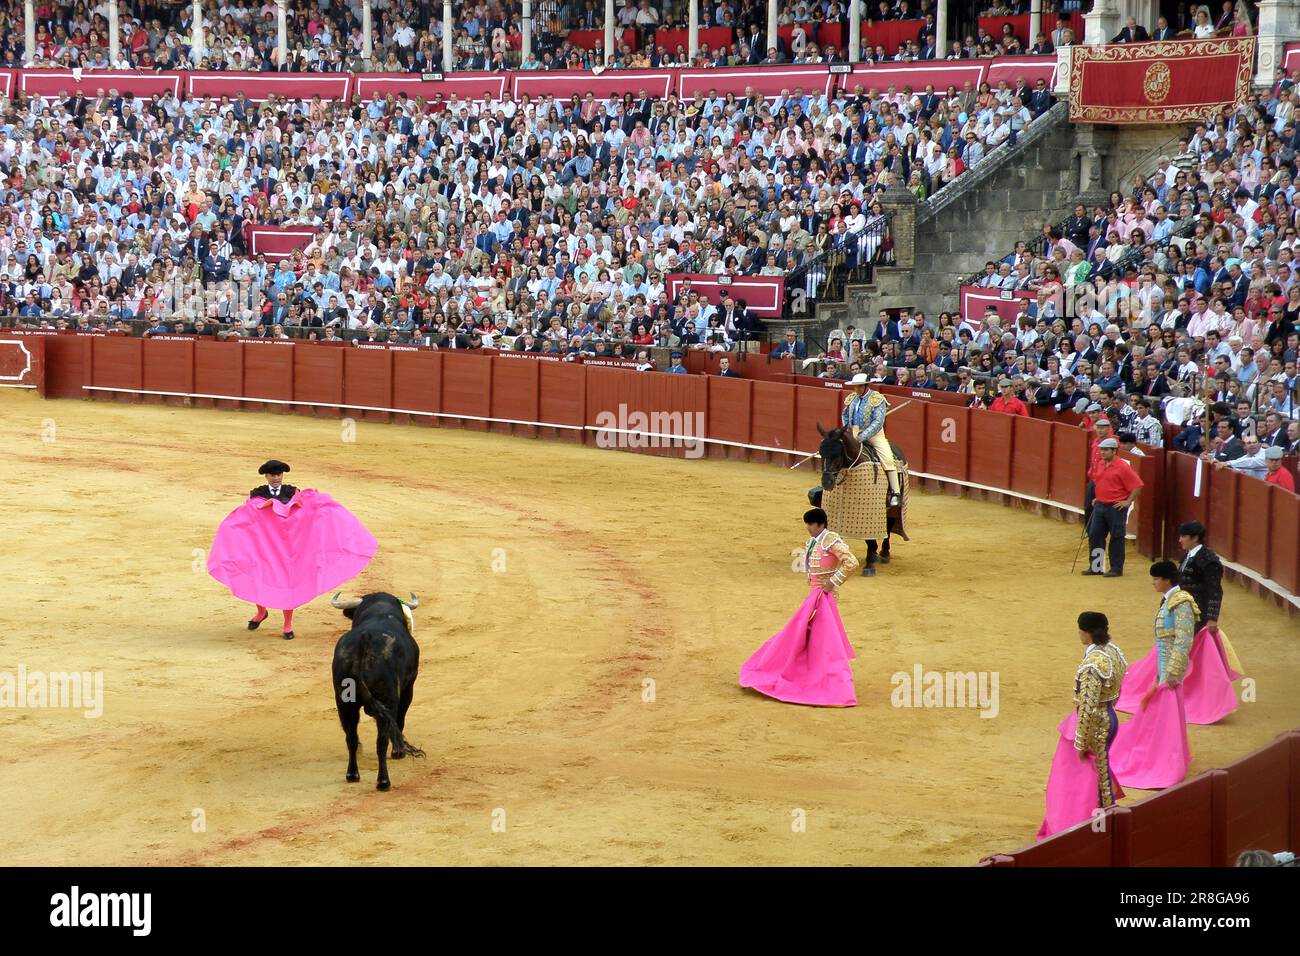 Bullfighting, Plaza De Toros, Seville, Spain Stock Photo